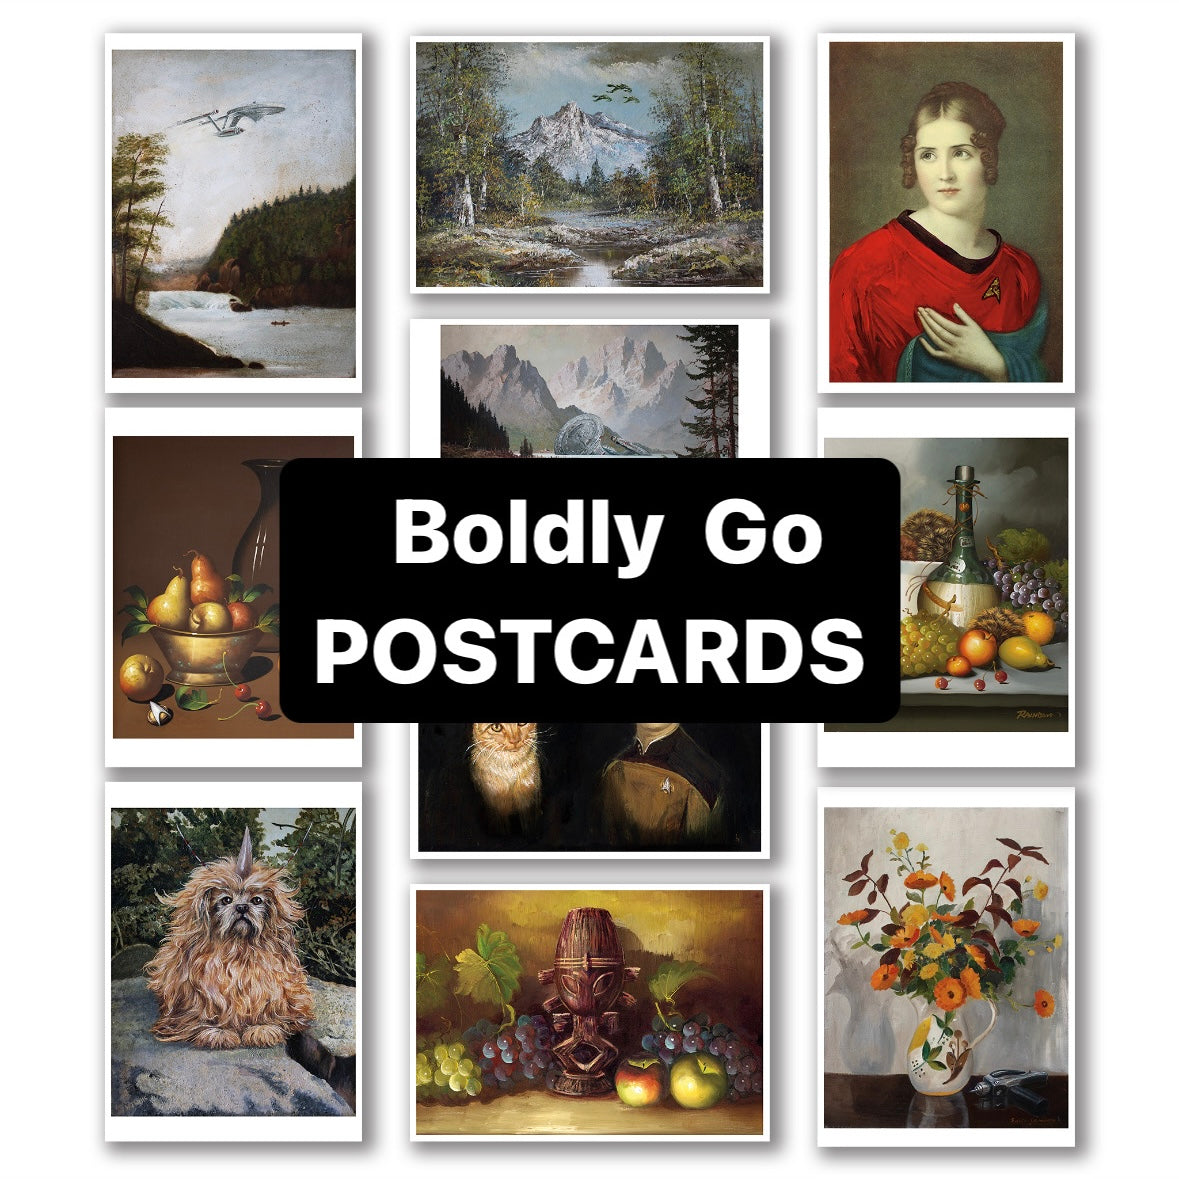 Boldly Go - Set of 10 POSTCARD PRINTS